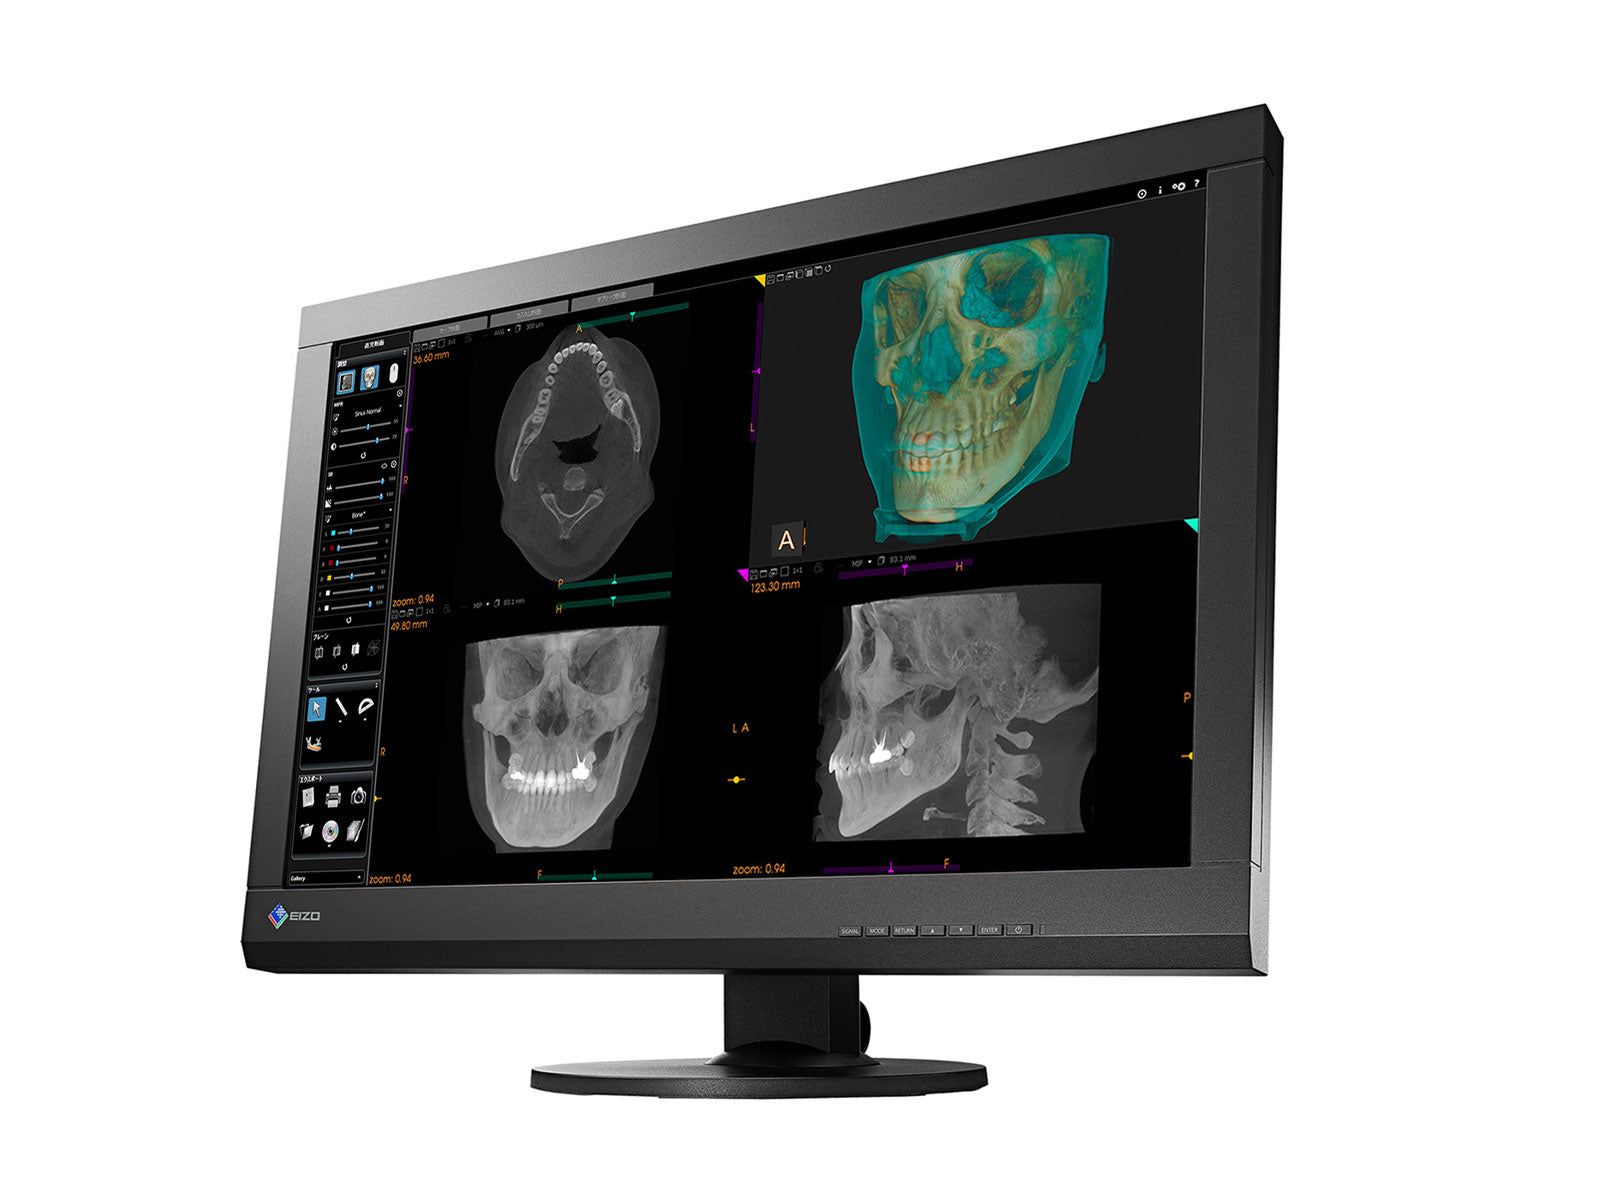 Eizo RadiForce MX242W 2.3MP 24" Color LED Clinical Review Display (MX242W-BK) Monitors.com 